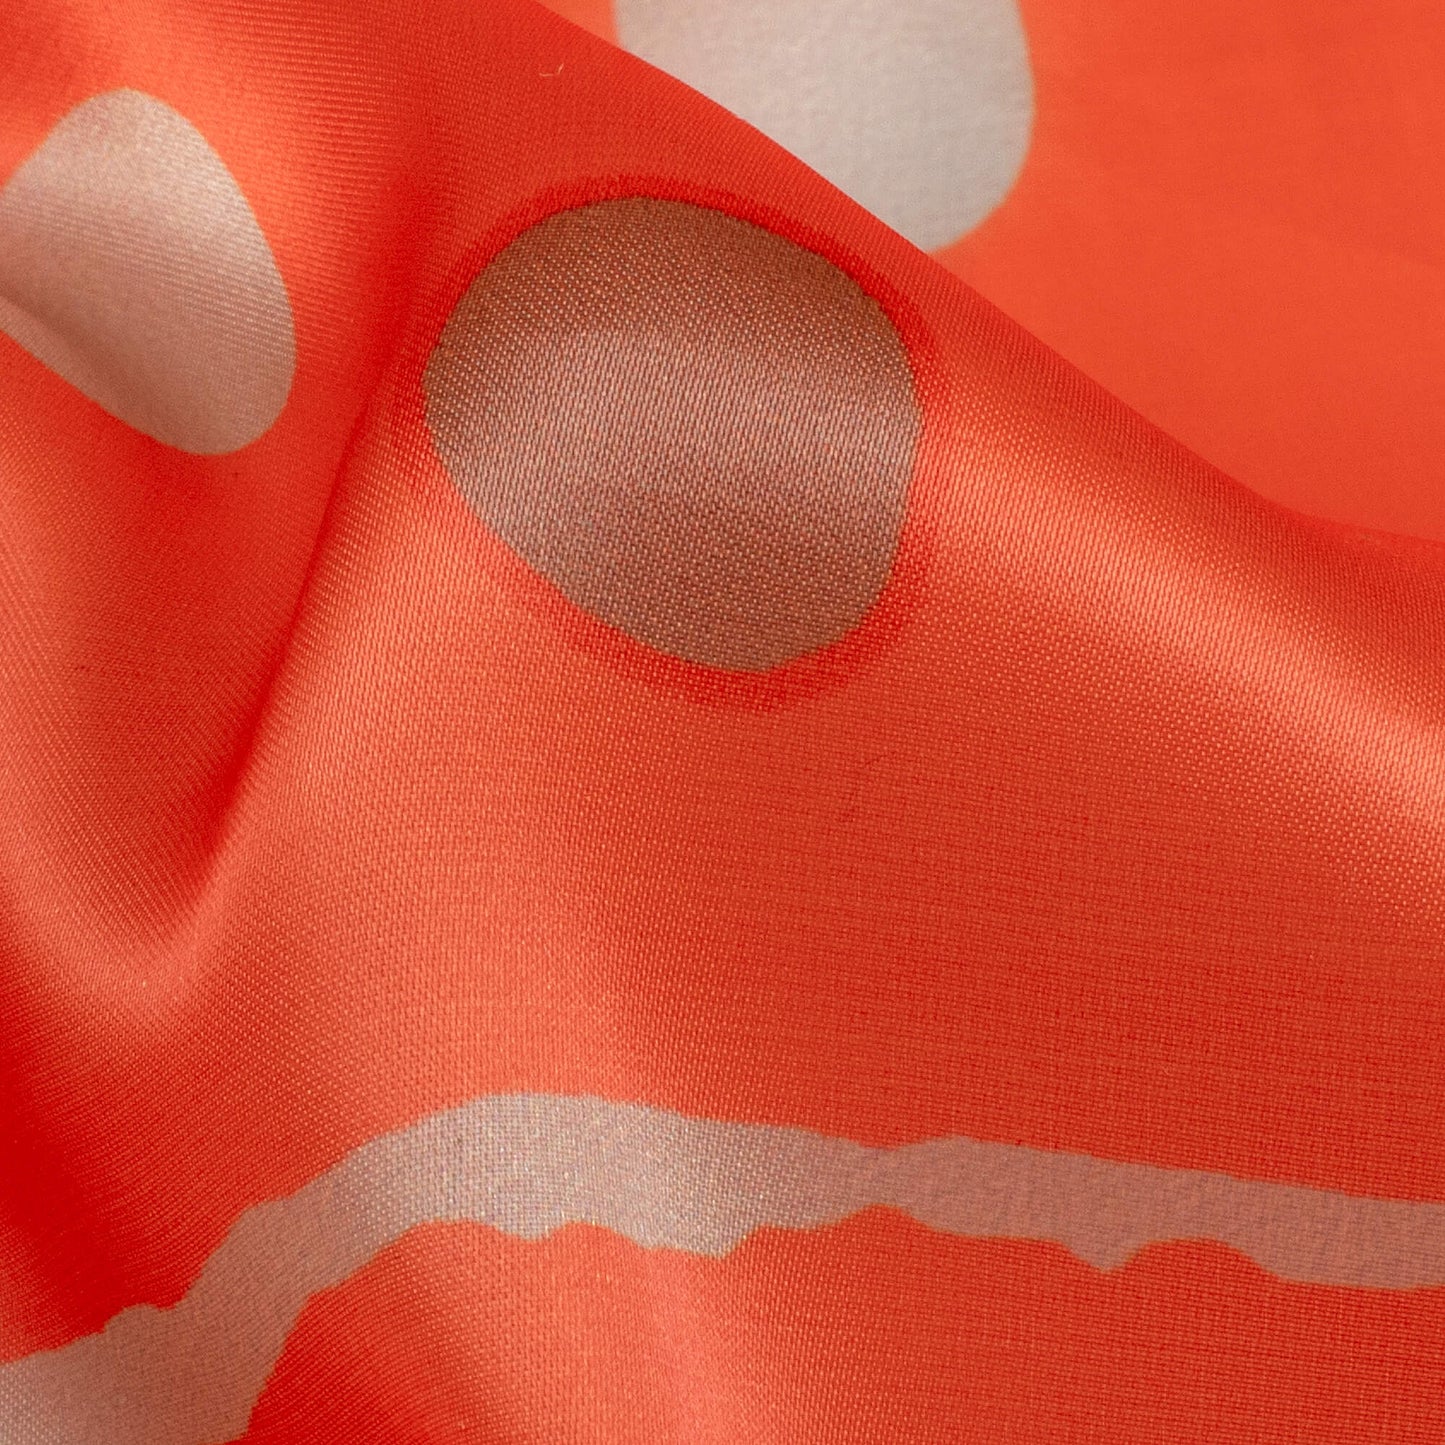 Vermilion Red And Rhino Grey Polka Dots Pattern Digital Print Organza Satin Fabric